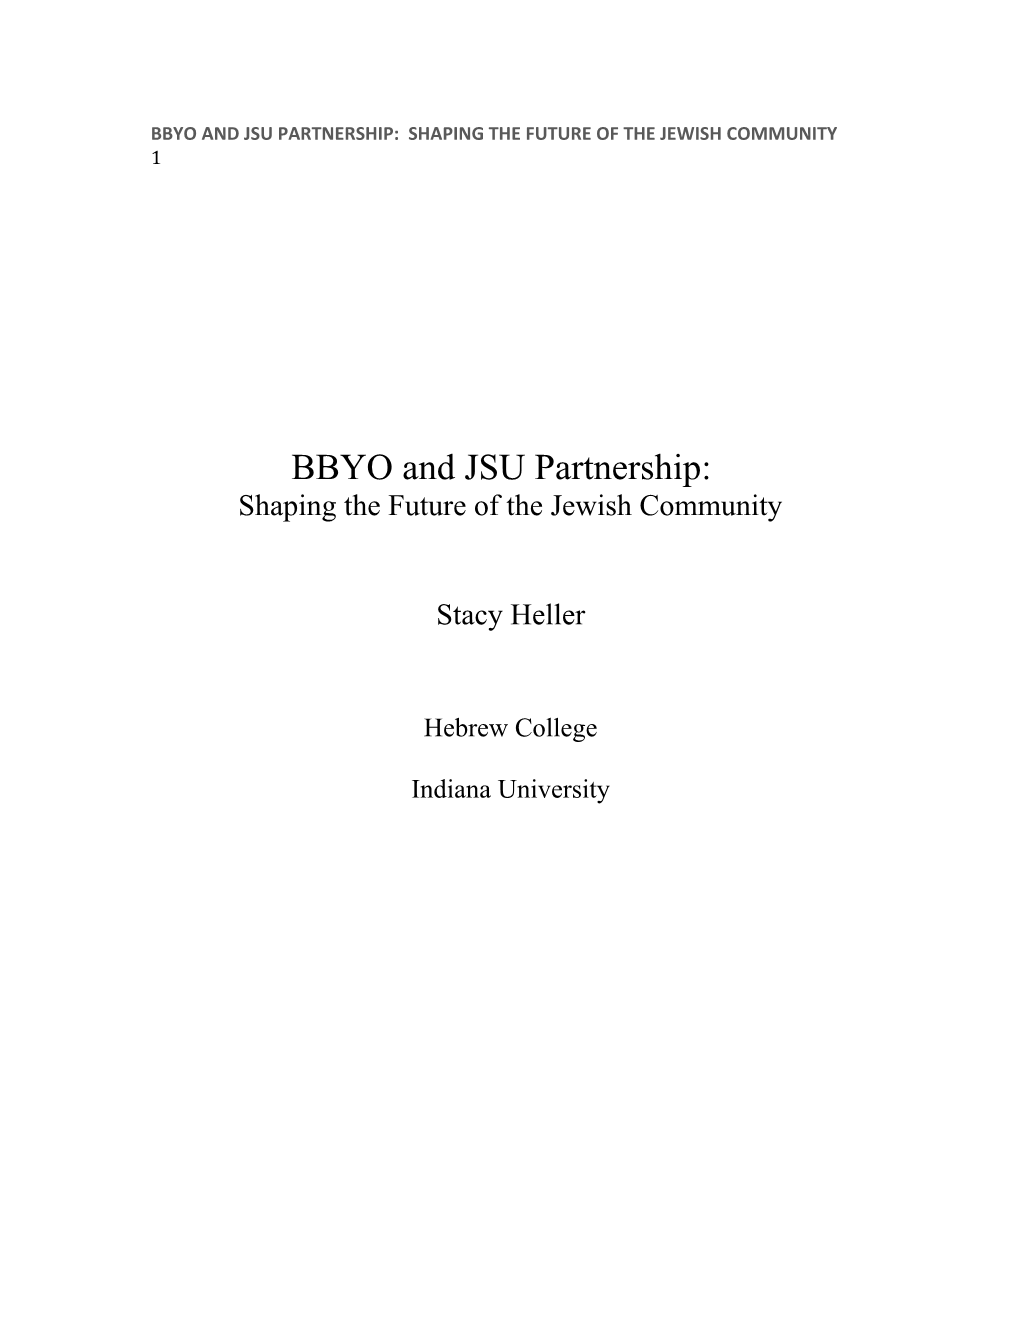 BBYO and JSU Partnership: Shaping the Future of the Jewish Community